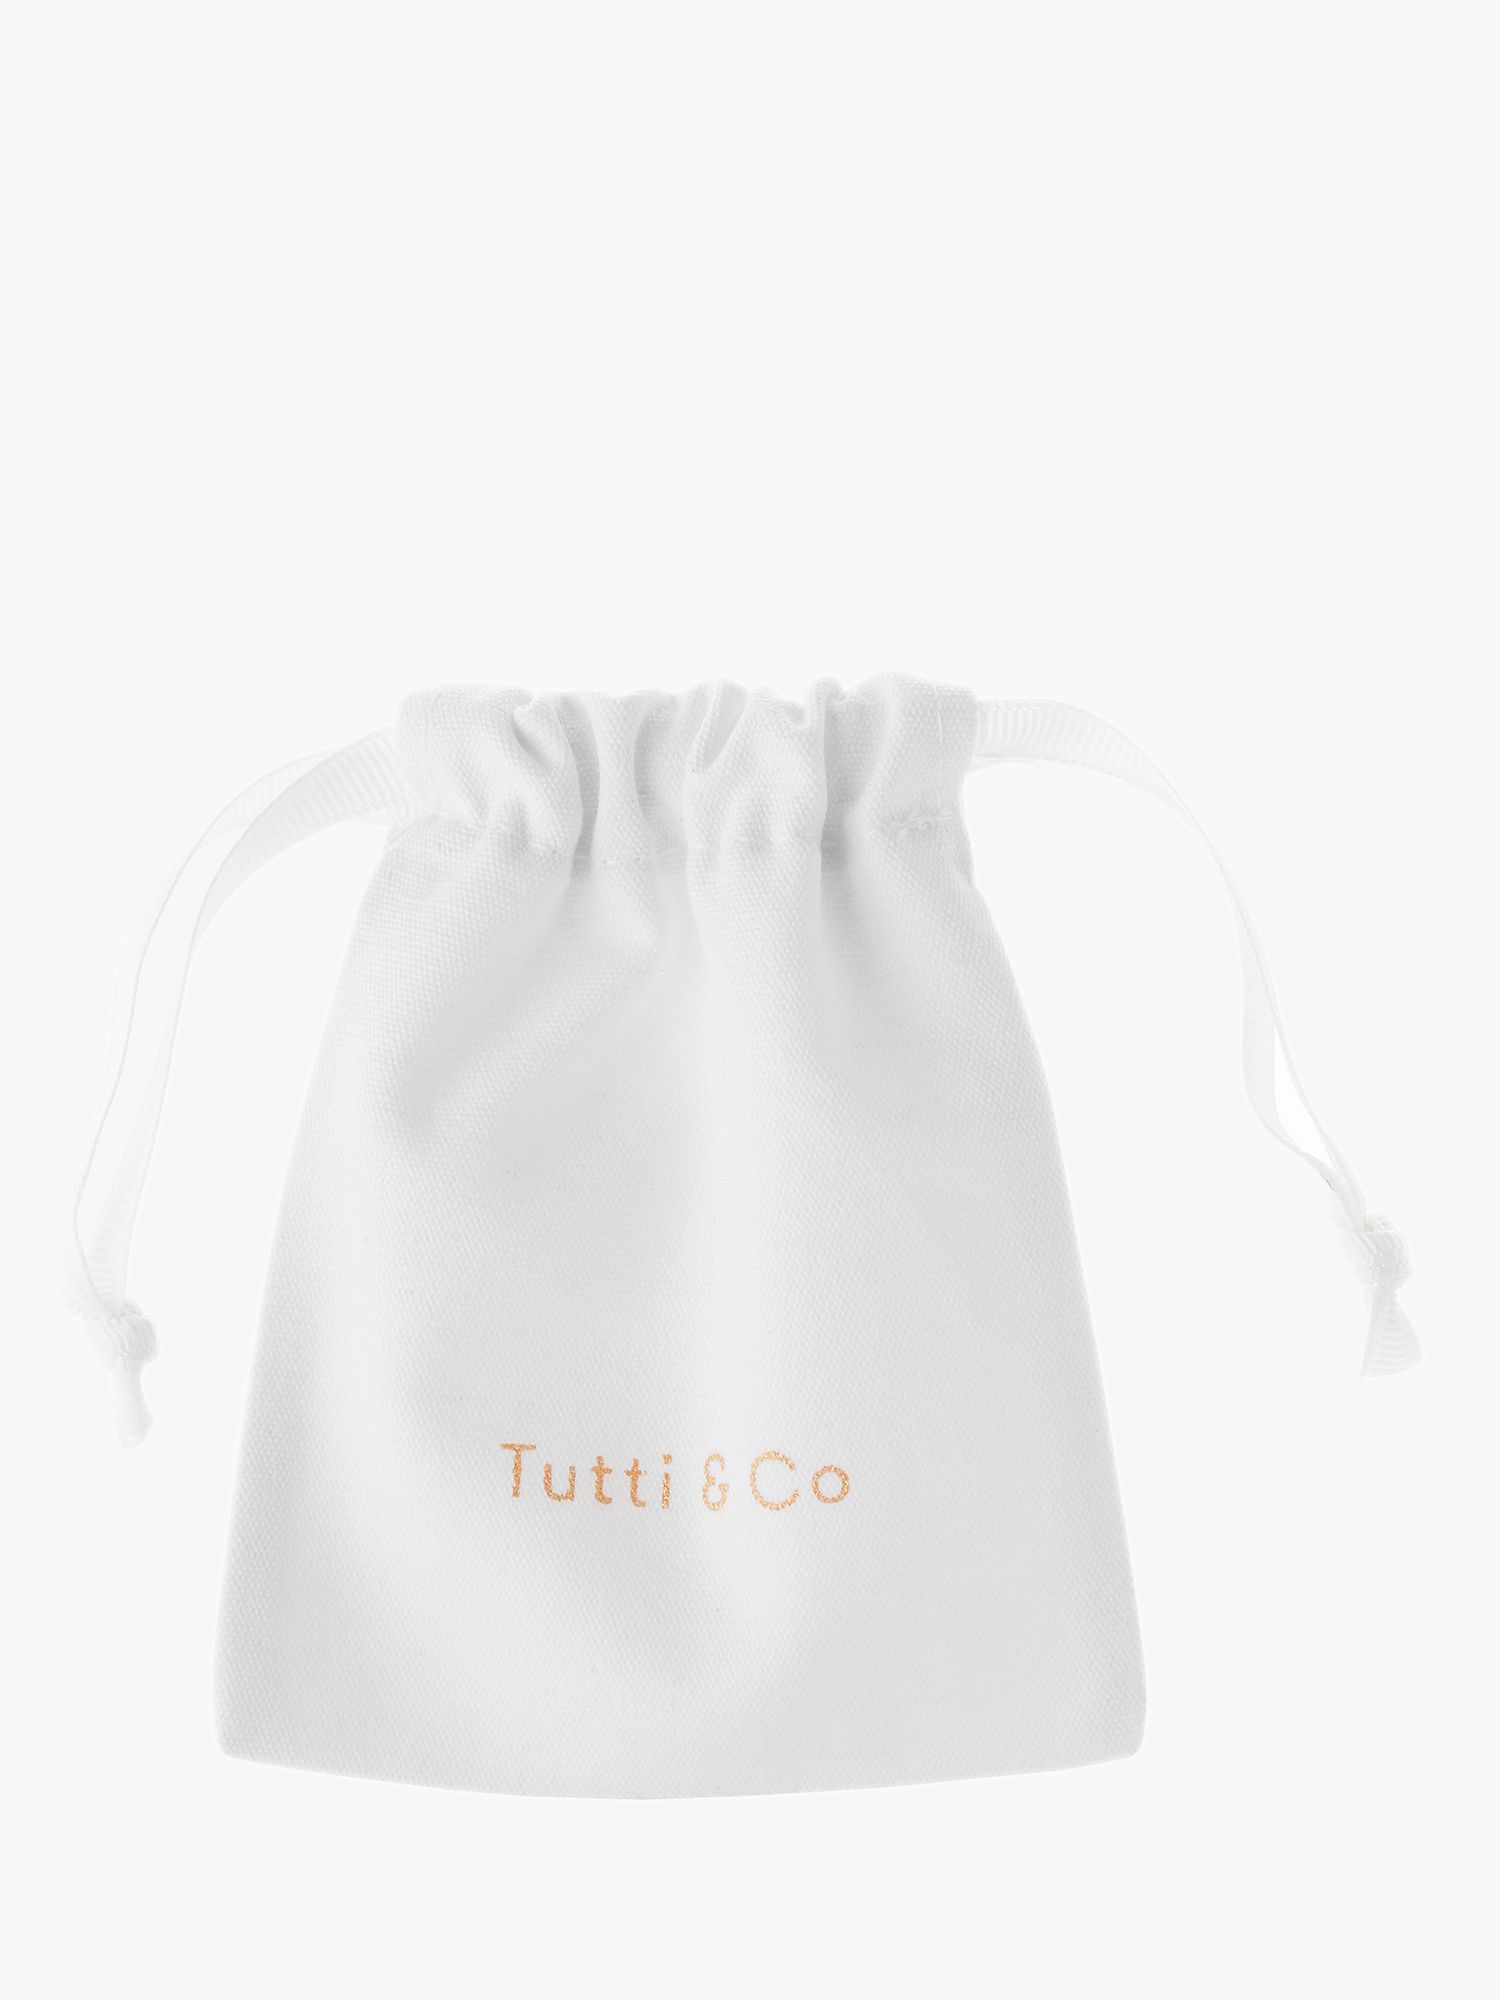 Buy Tutti & Co Praise Open Textured Twist Bangle Online at johnlewis.com